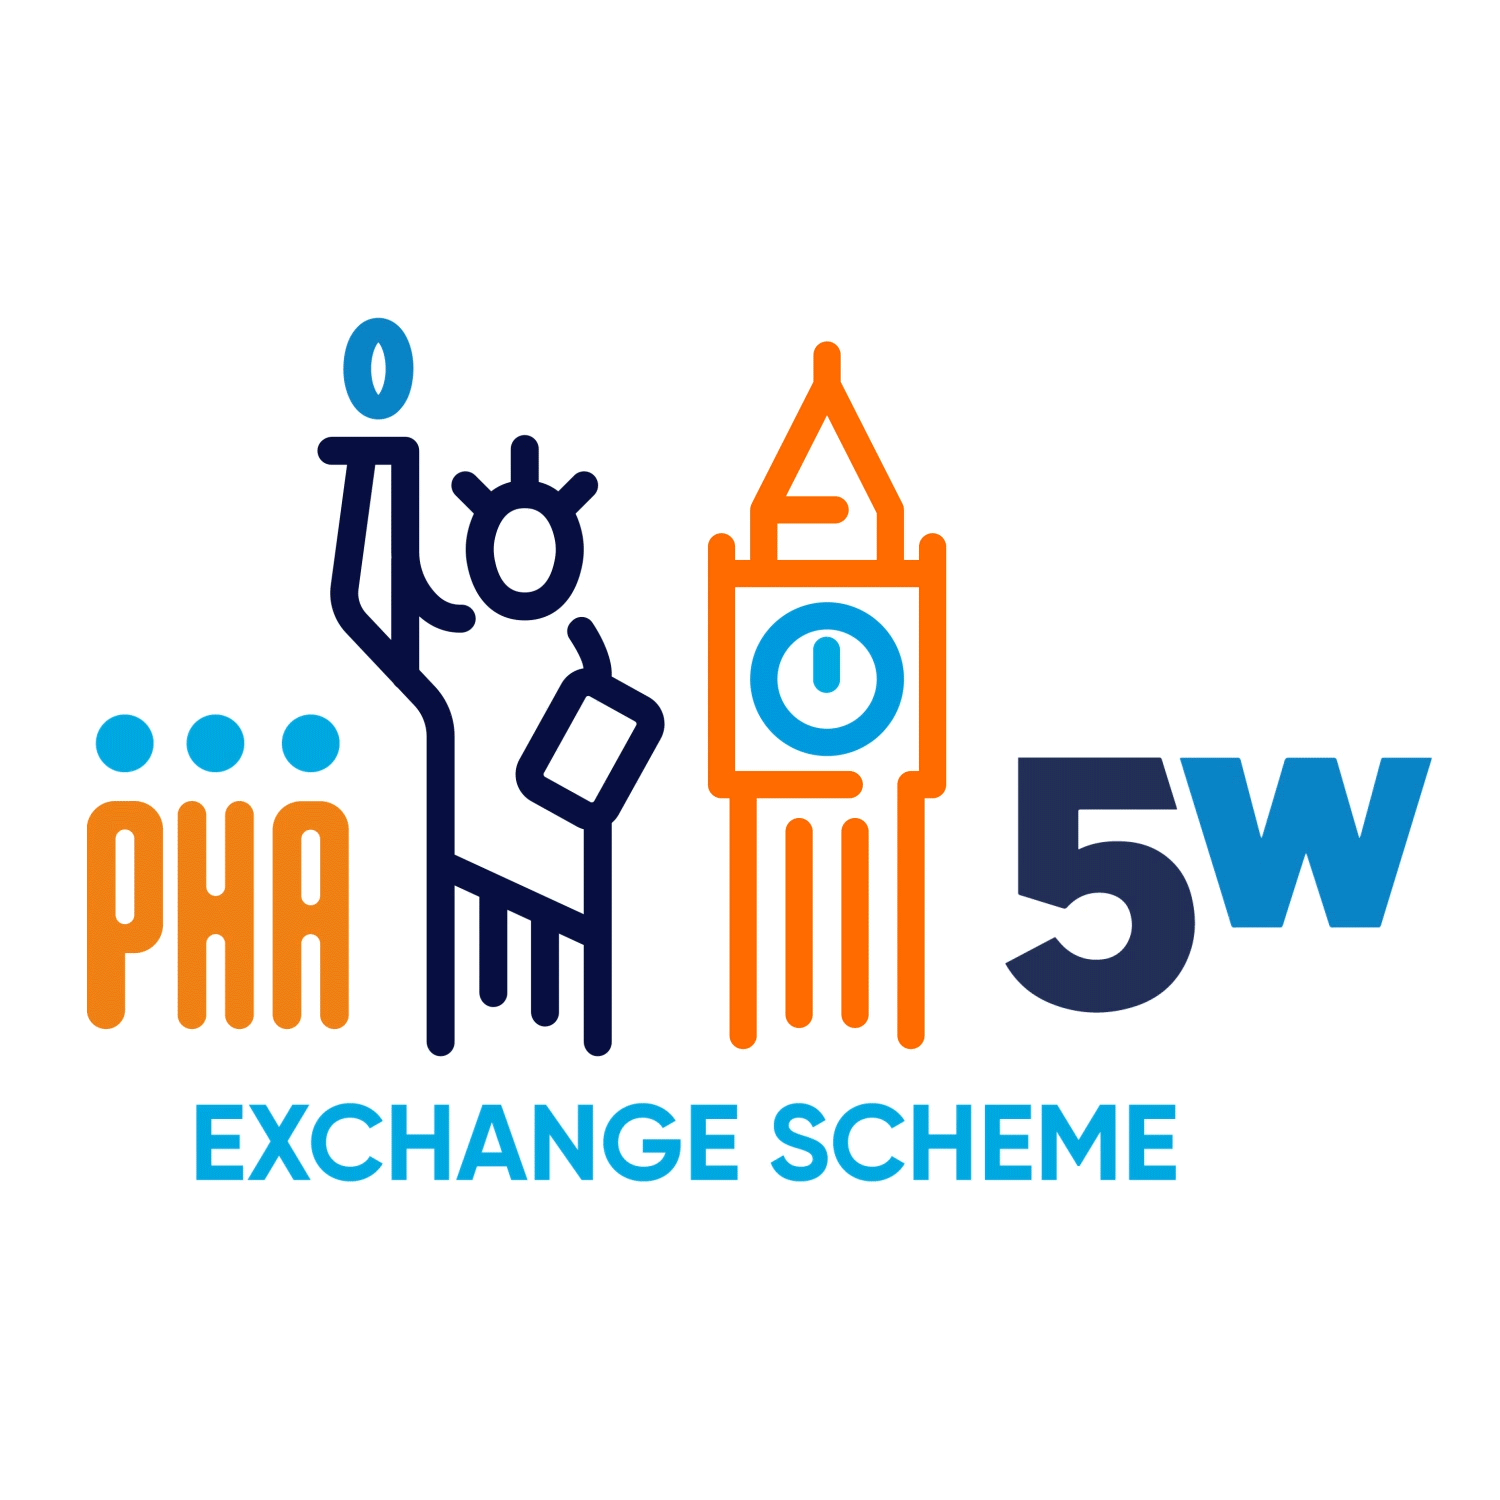 The PHA Group Exchange Scheme 5W